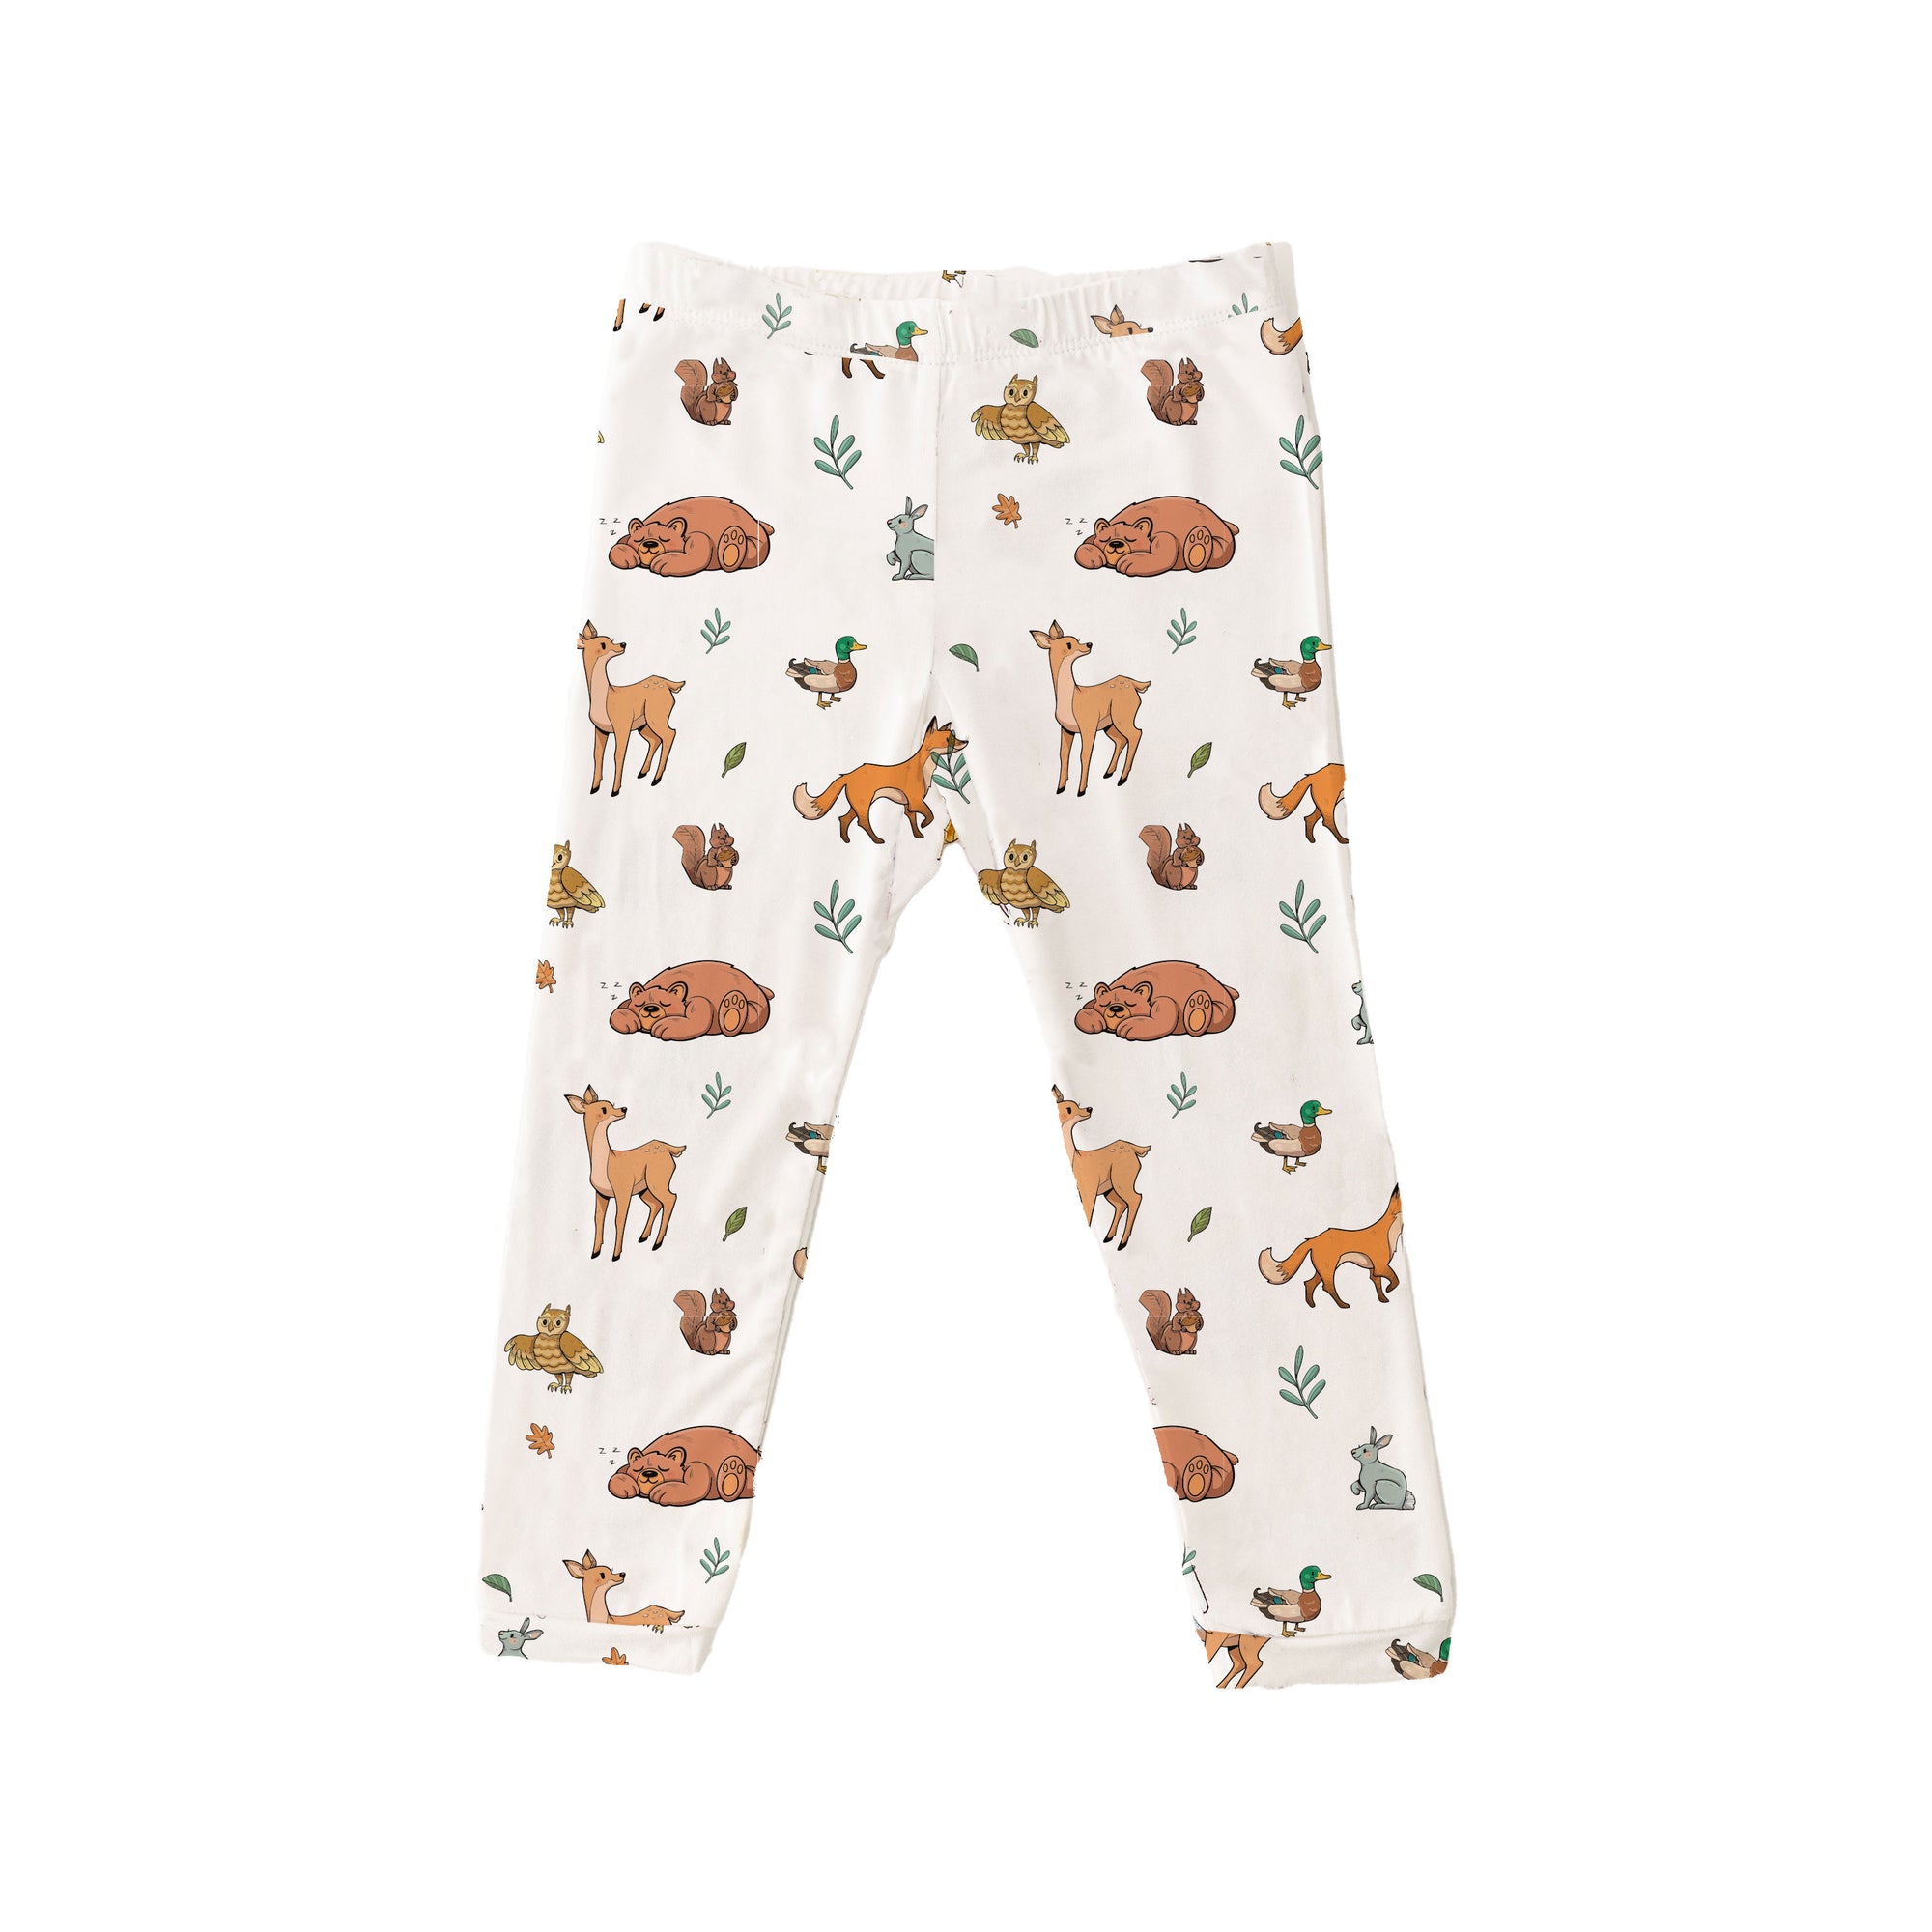 NEW Bamboo Toddler Pajama Set - Winter Collection